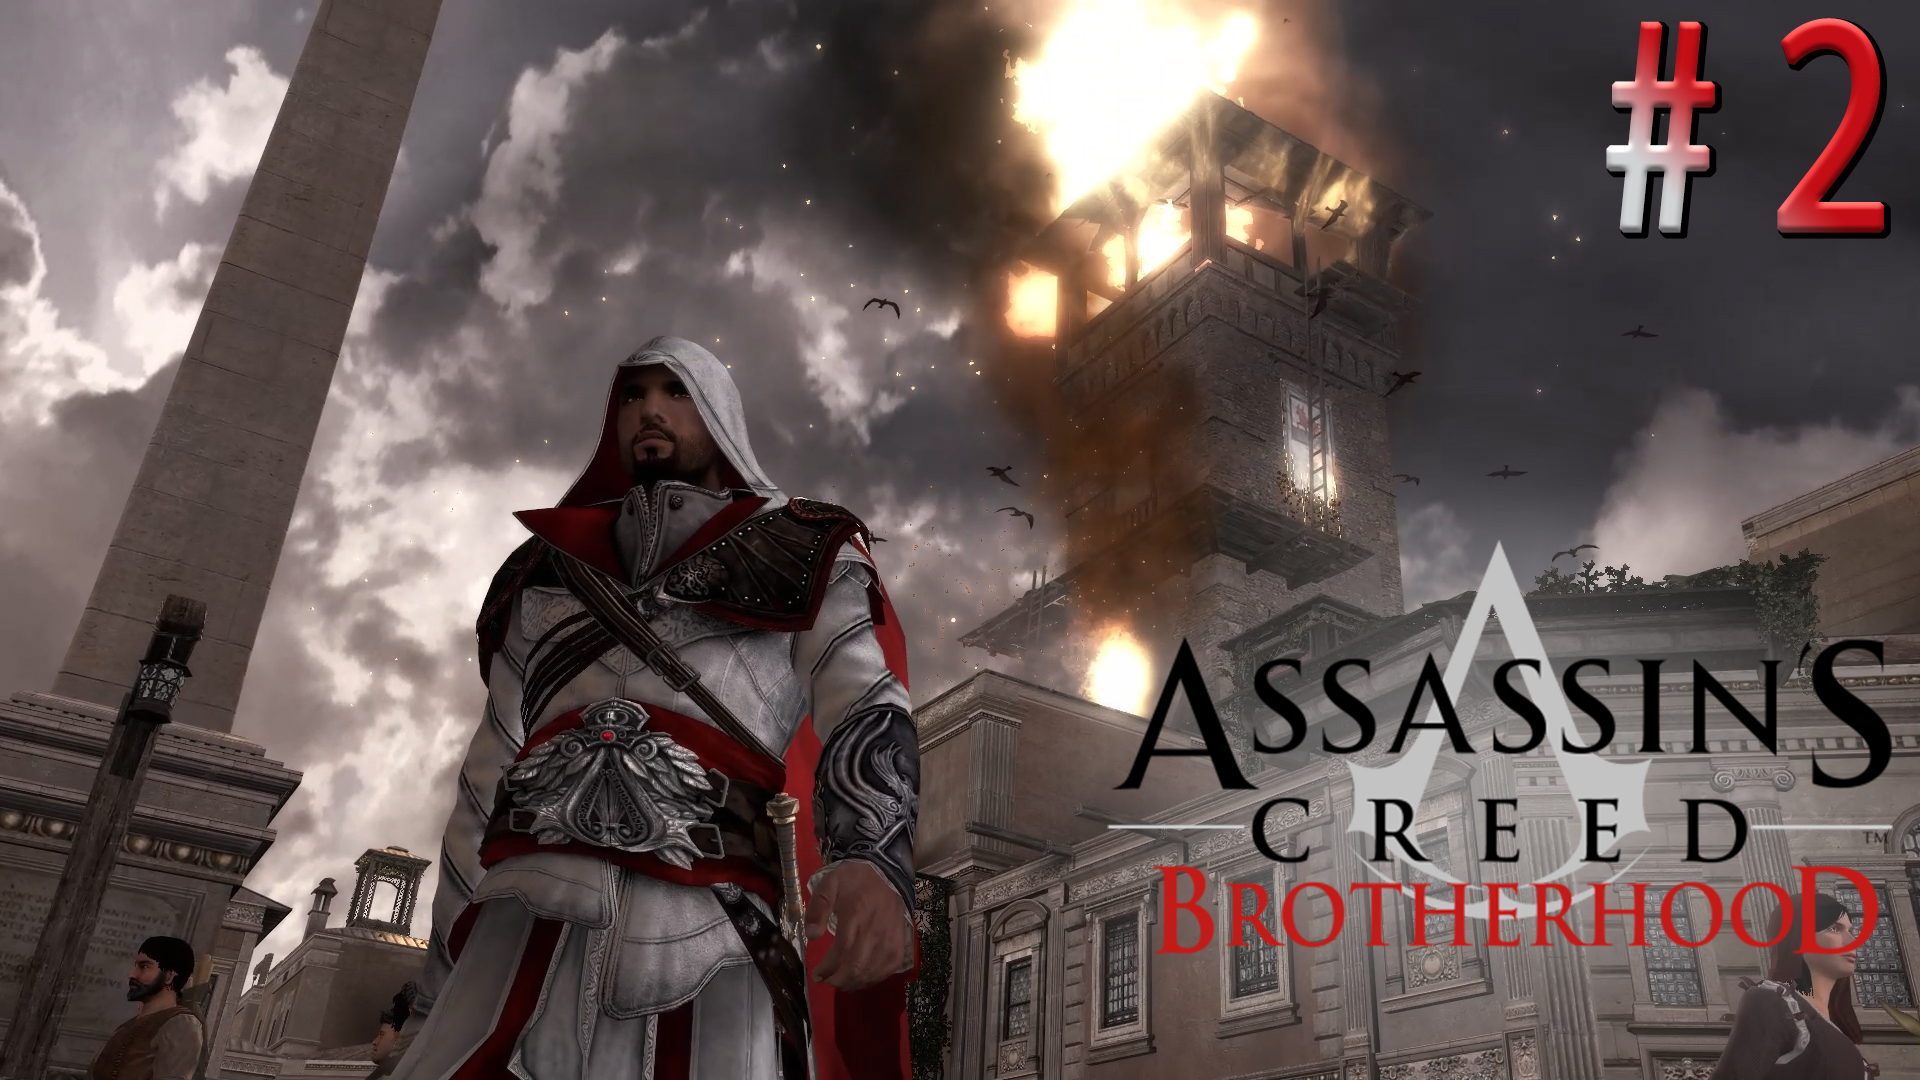 Assassins Creed Brotherhood Рим пейзаж. Ассасин братство крови Леонардо да Винчи. Desmond Miles Assassin's Creed Brotherhood. Assain.